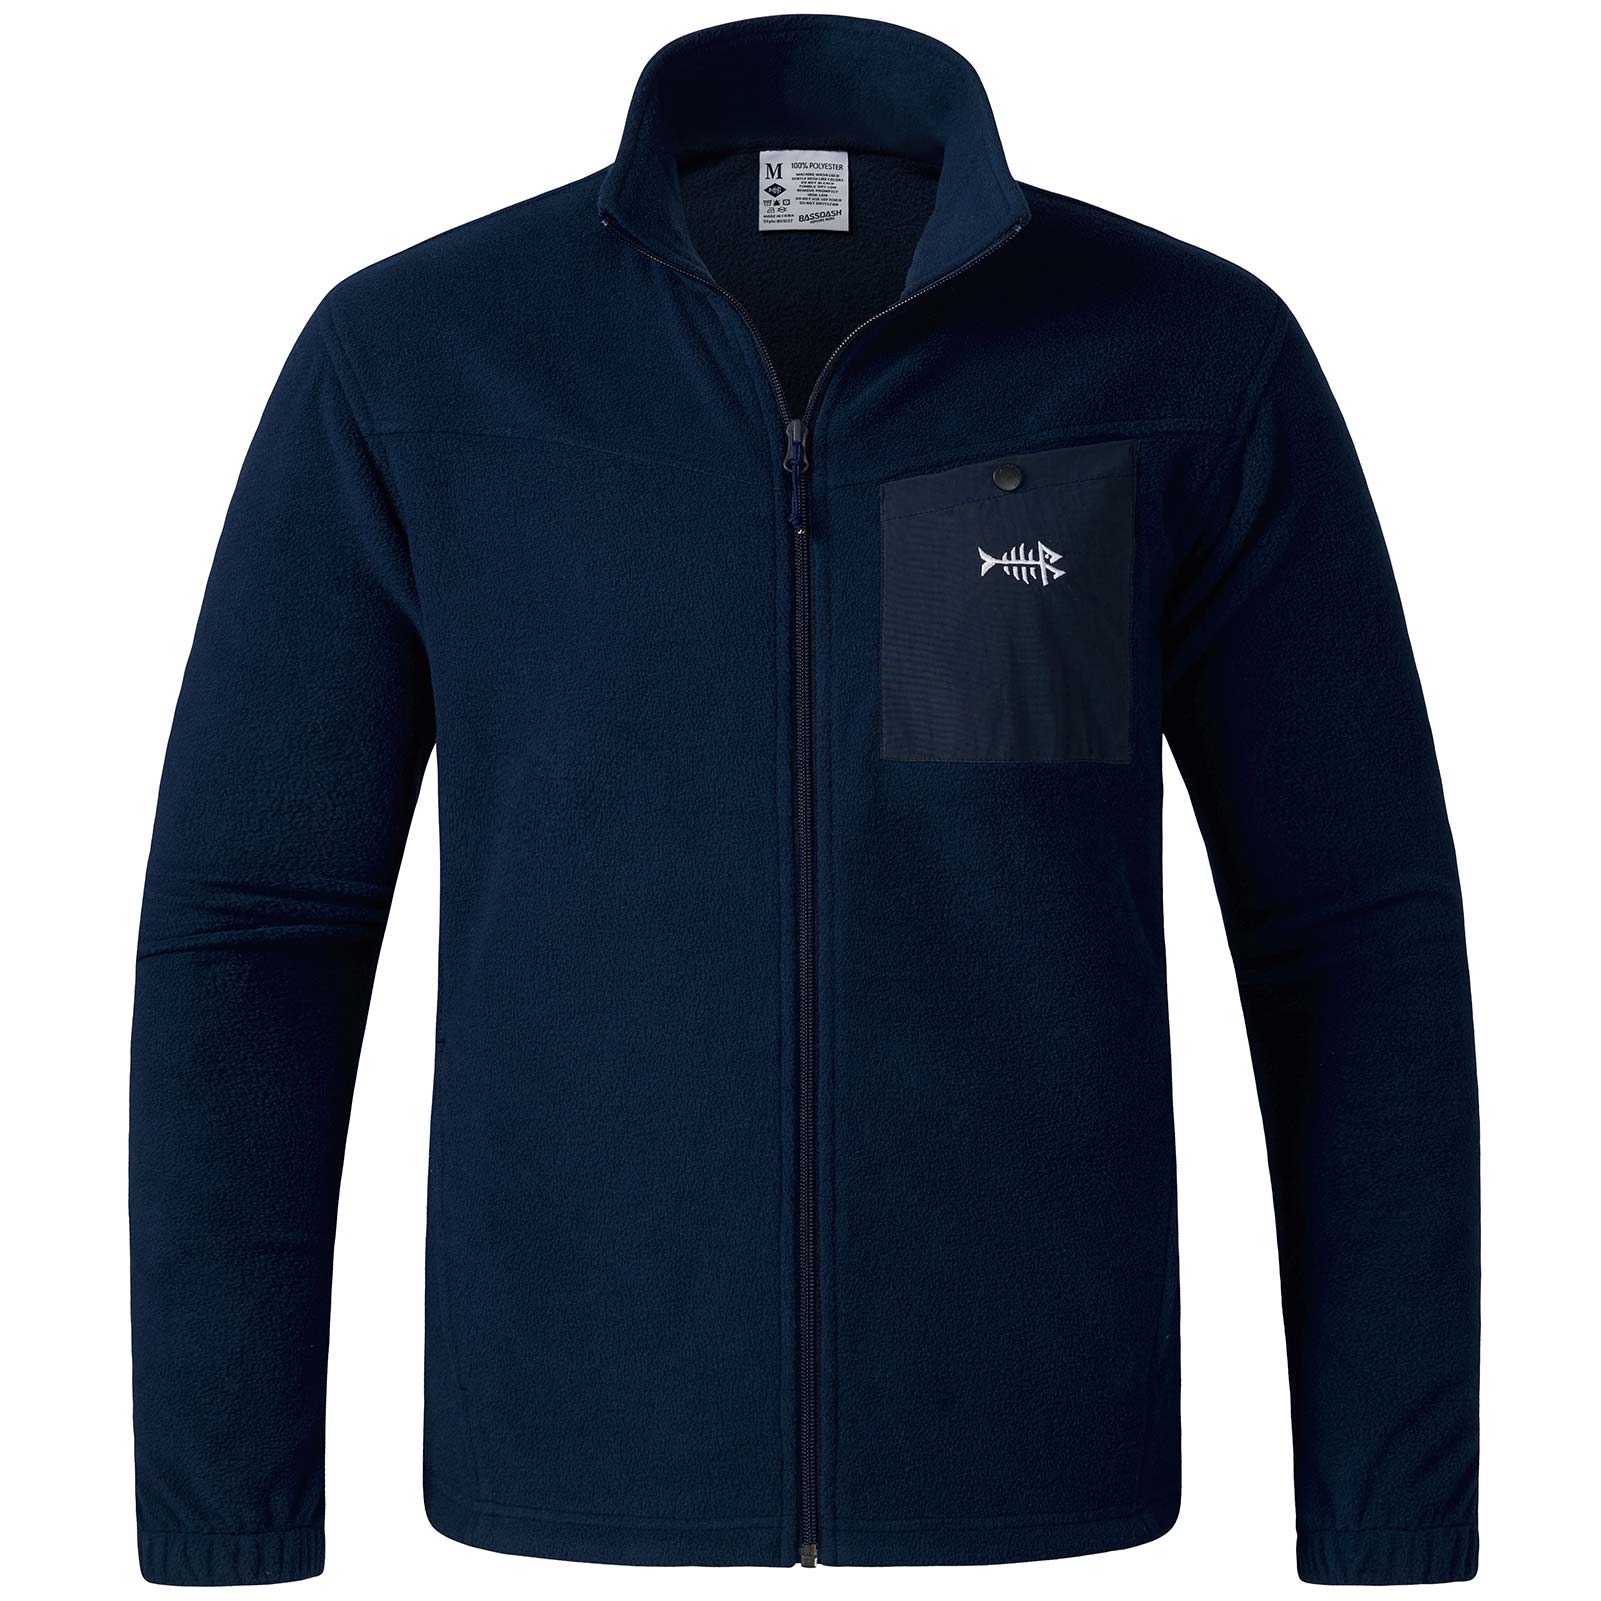 Men's Full Zip Jacket, 100% Wool Hand Made, Grey, Side Pockets, Fully  Fleece Lined -  Canada